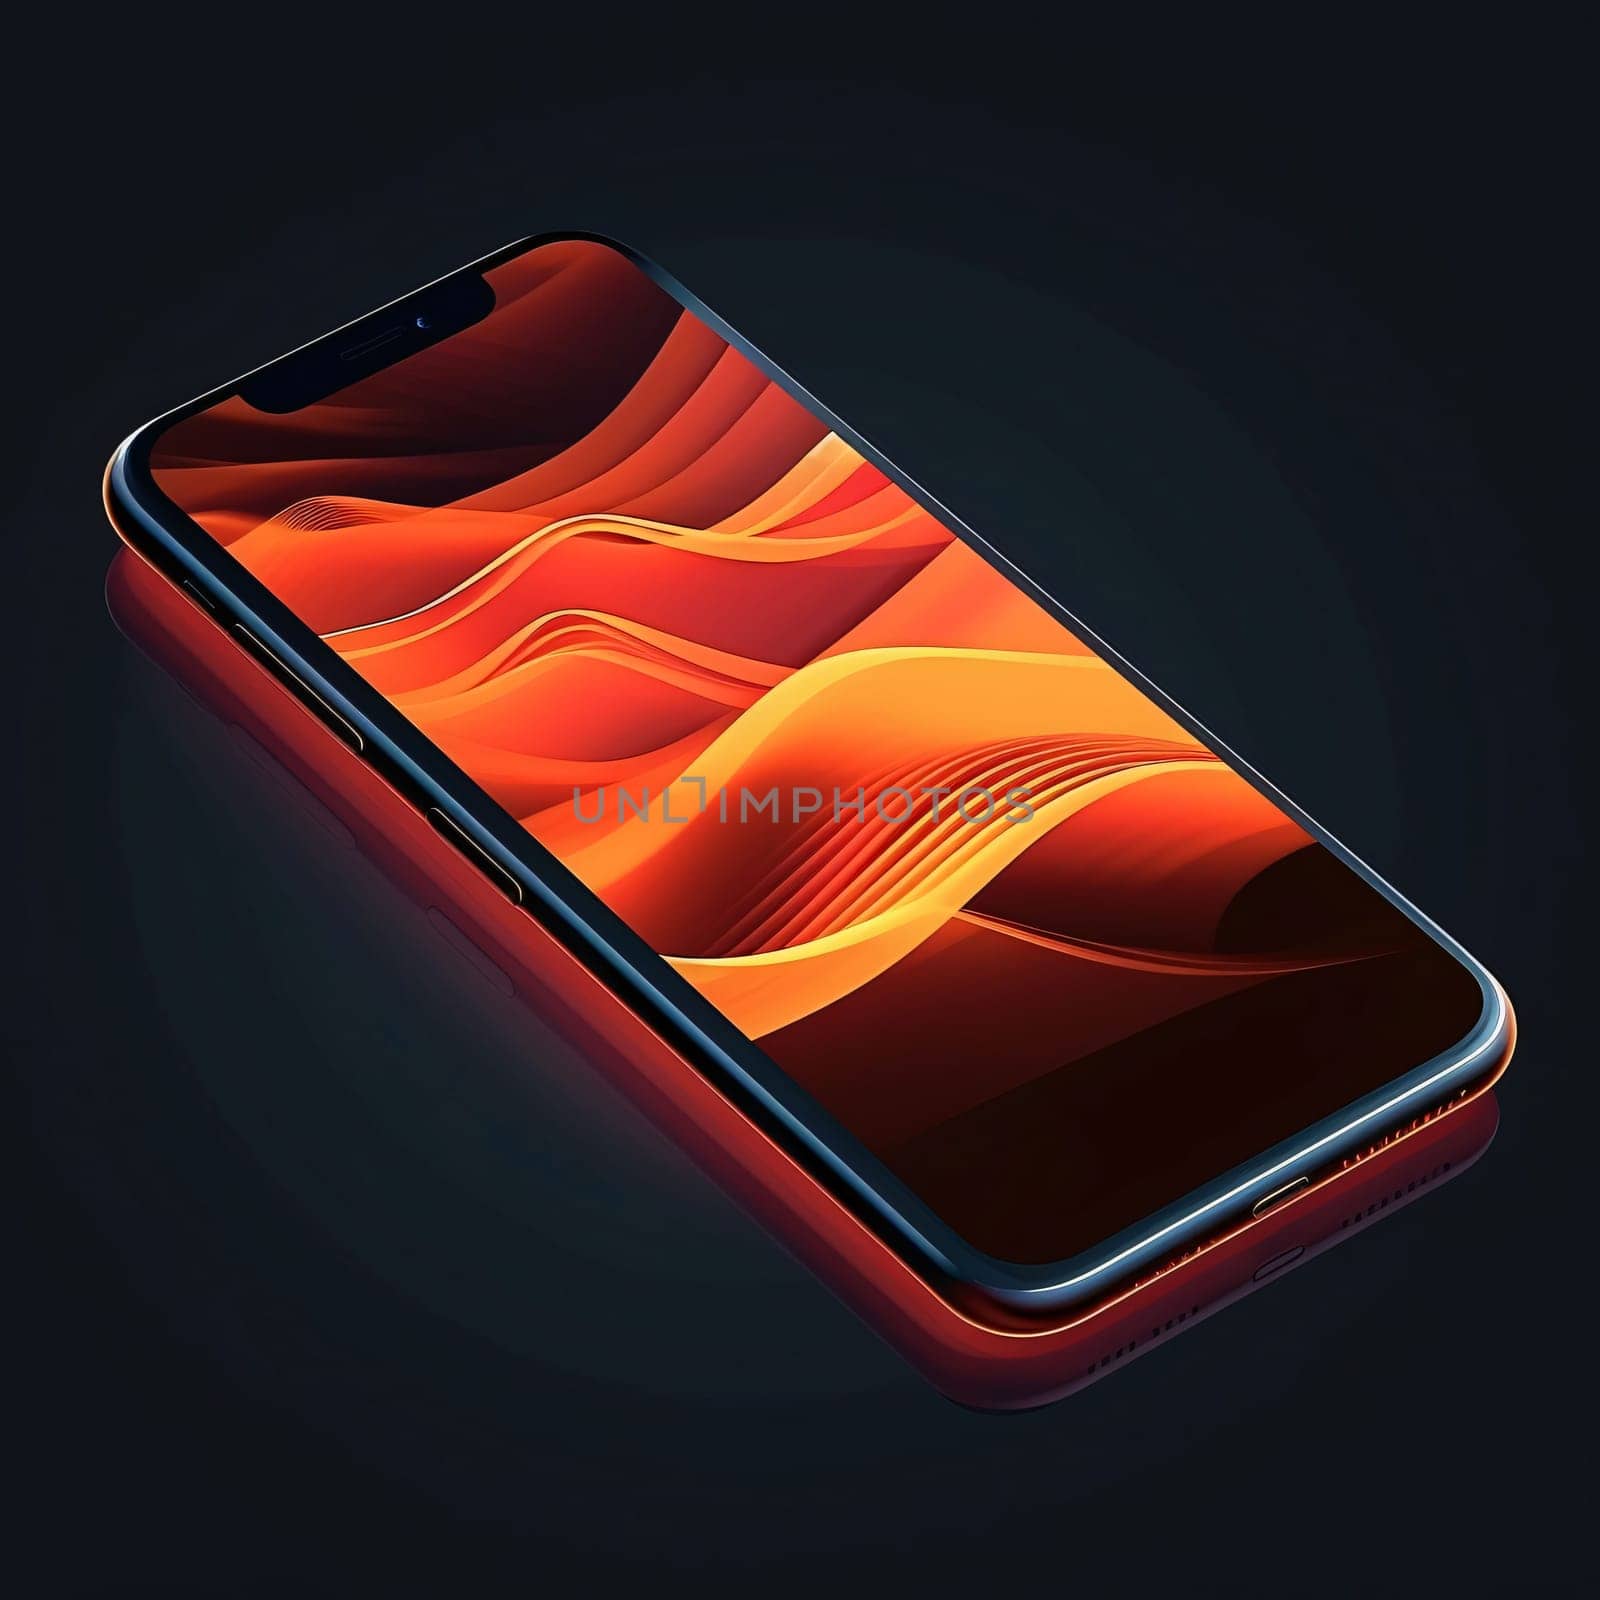 Smartphone screen: Smartphone with orange screen on black background. 3d illustration.